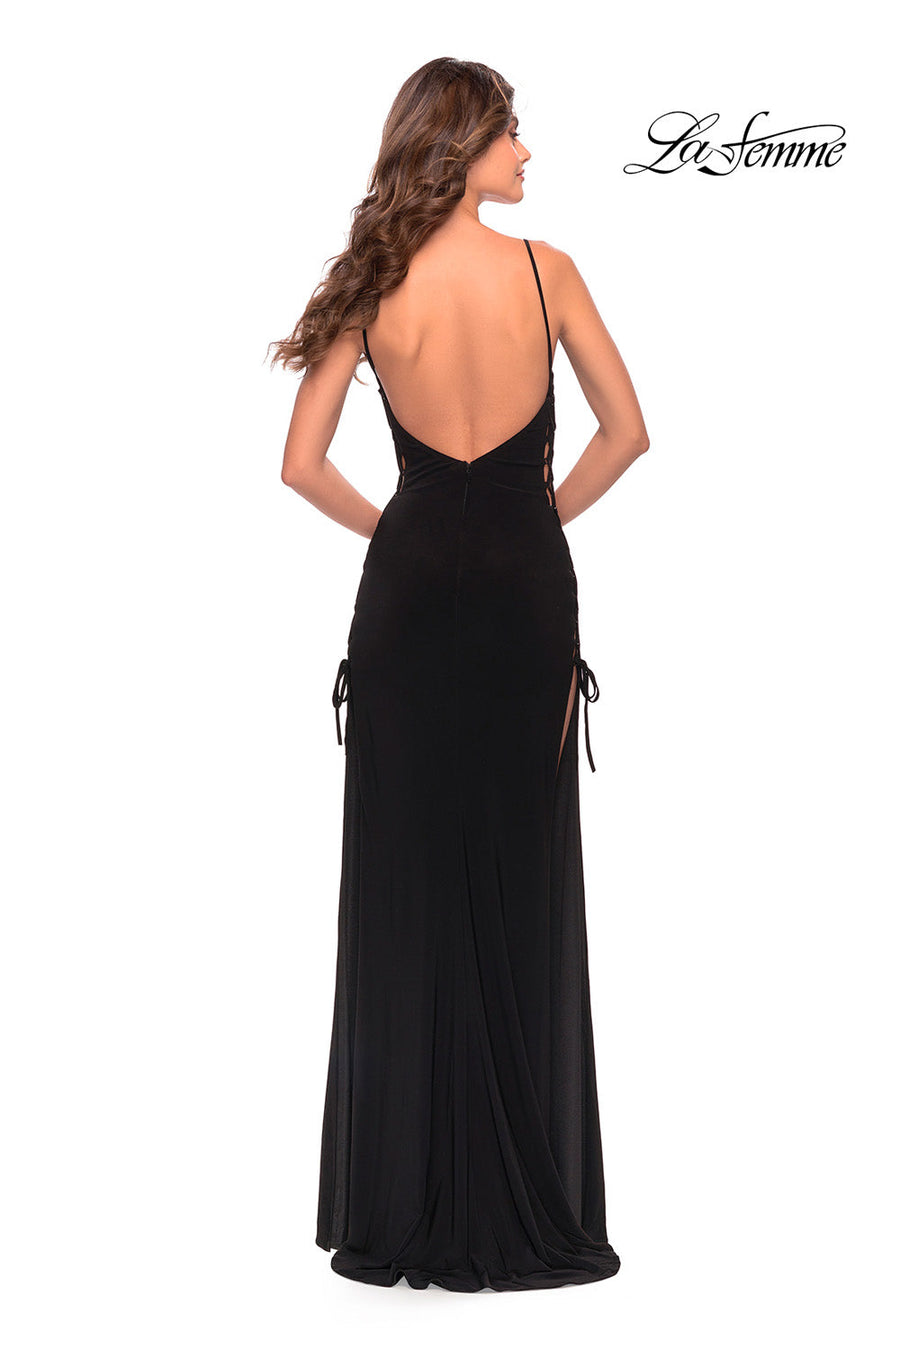 La Femme 31311 prom dress images.  La Femme 31311 is available in these colors: Black.